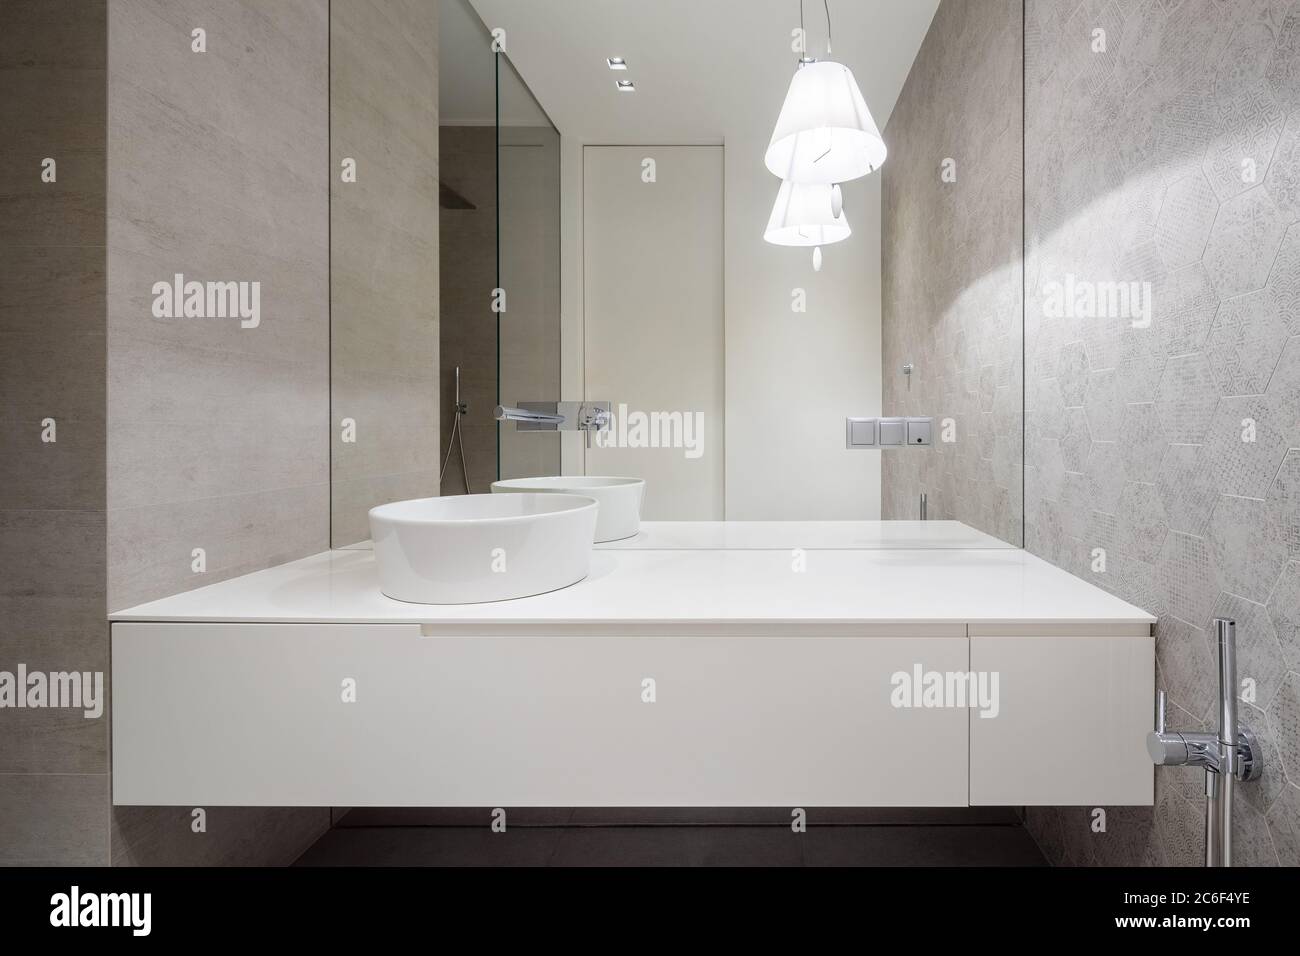 Minimalist bathroom with hexagonal tiles, big mirror and oval countertop basin Stock Photo